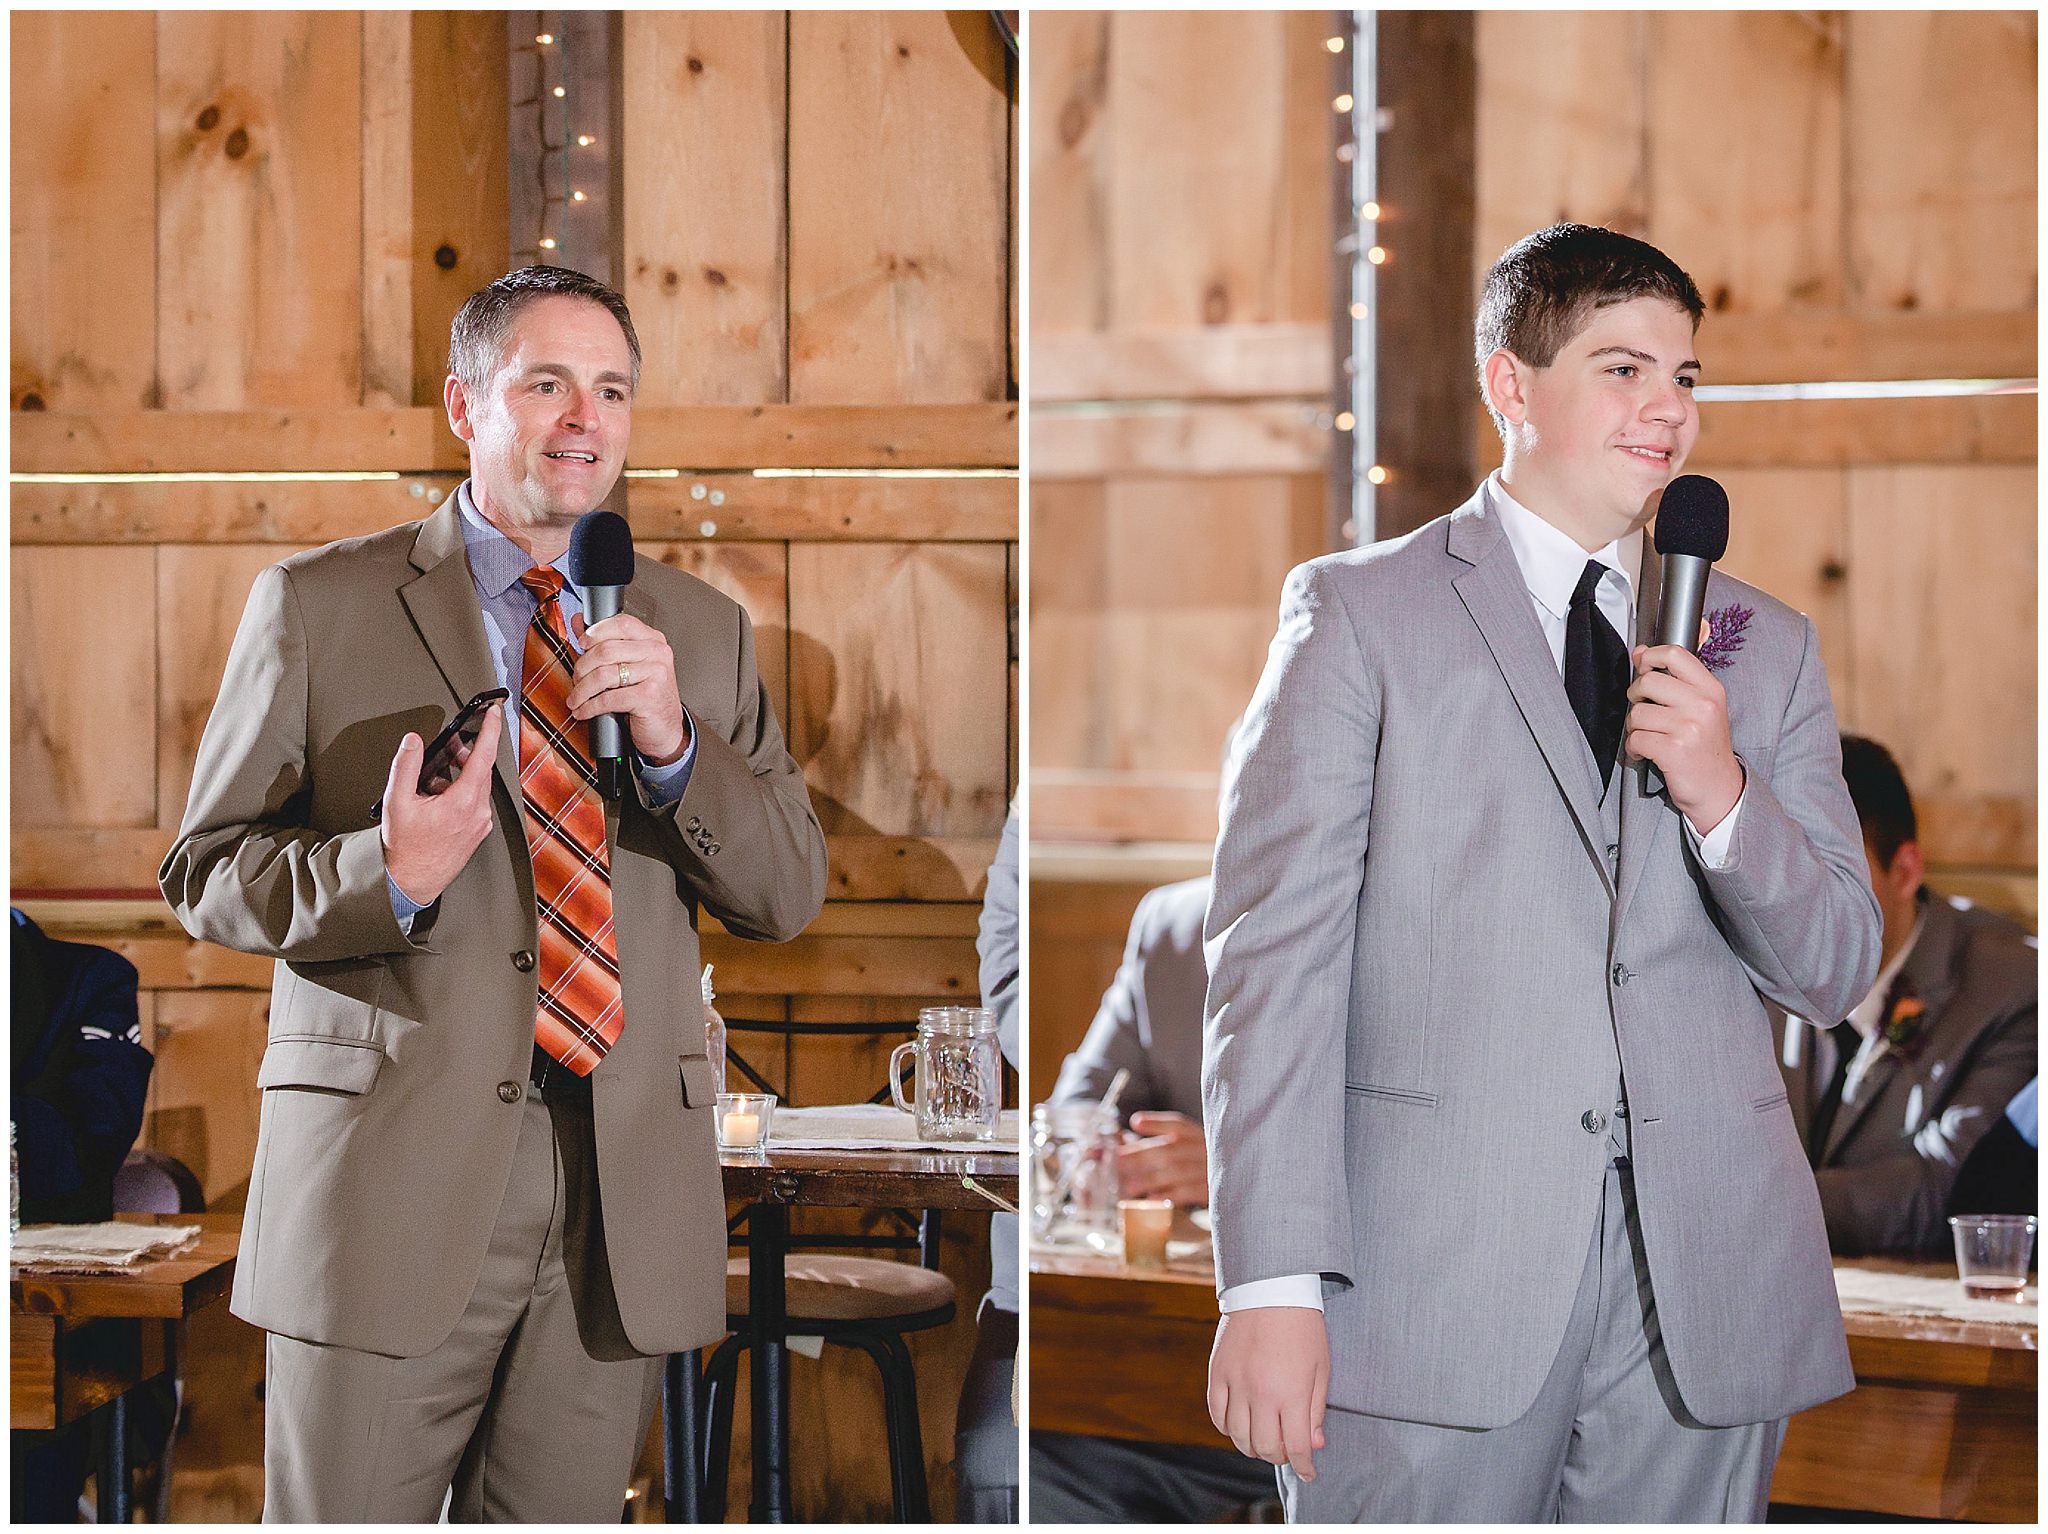 Best men give speeches at a Barn at Soergel Hollow wedding reception